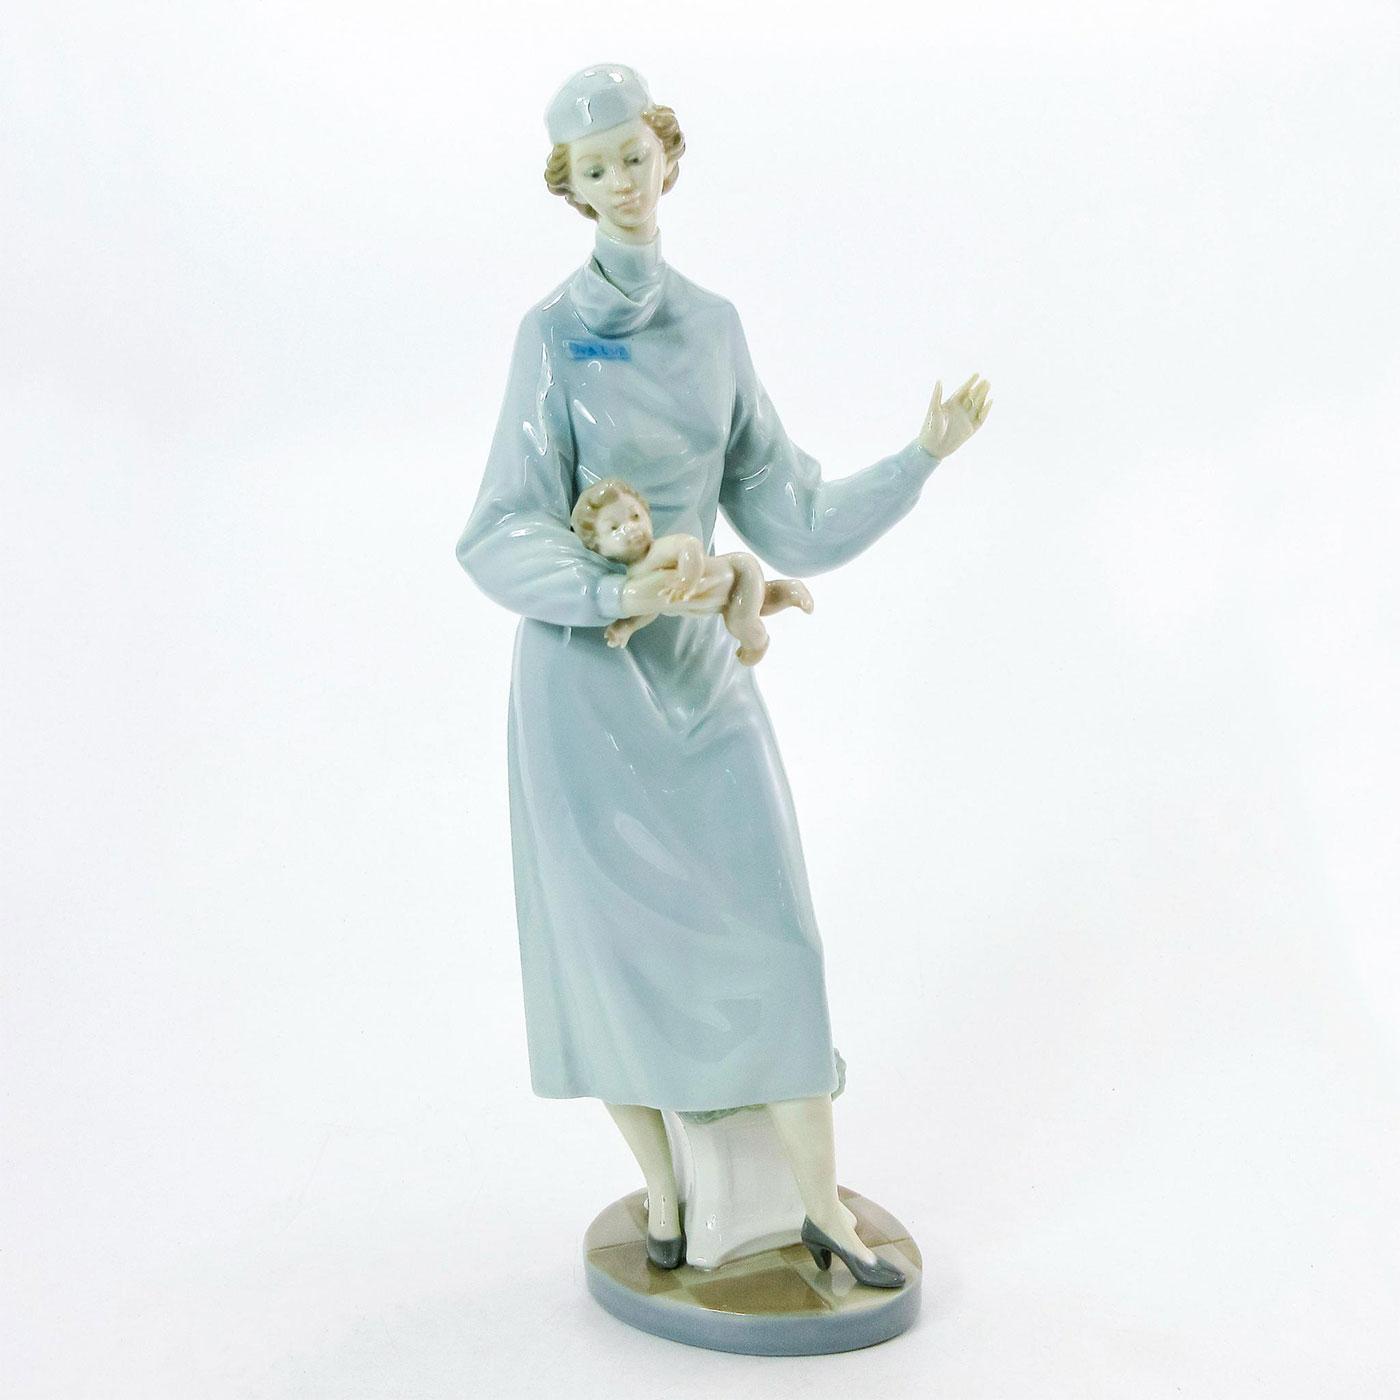 Midwife 1005431 - Lladro Porcelain Figurine